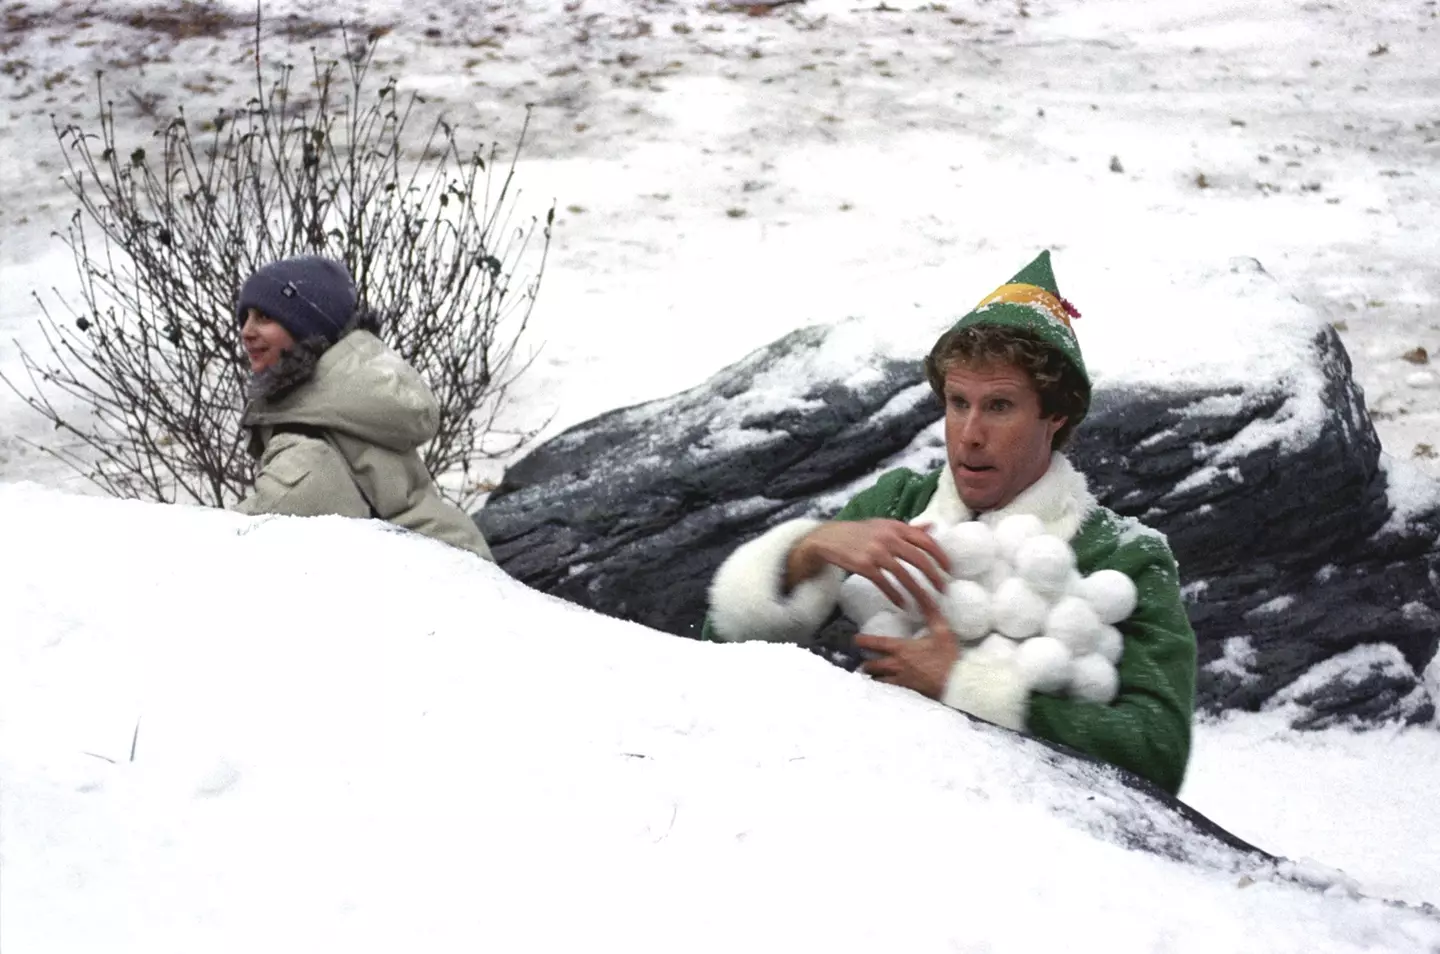 It's fair to say Buddy wasn't bad at throwing snowballs.